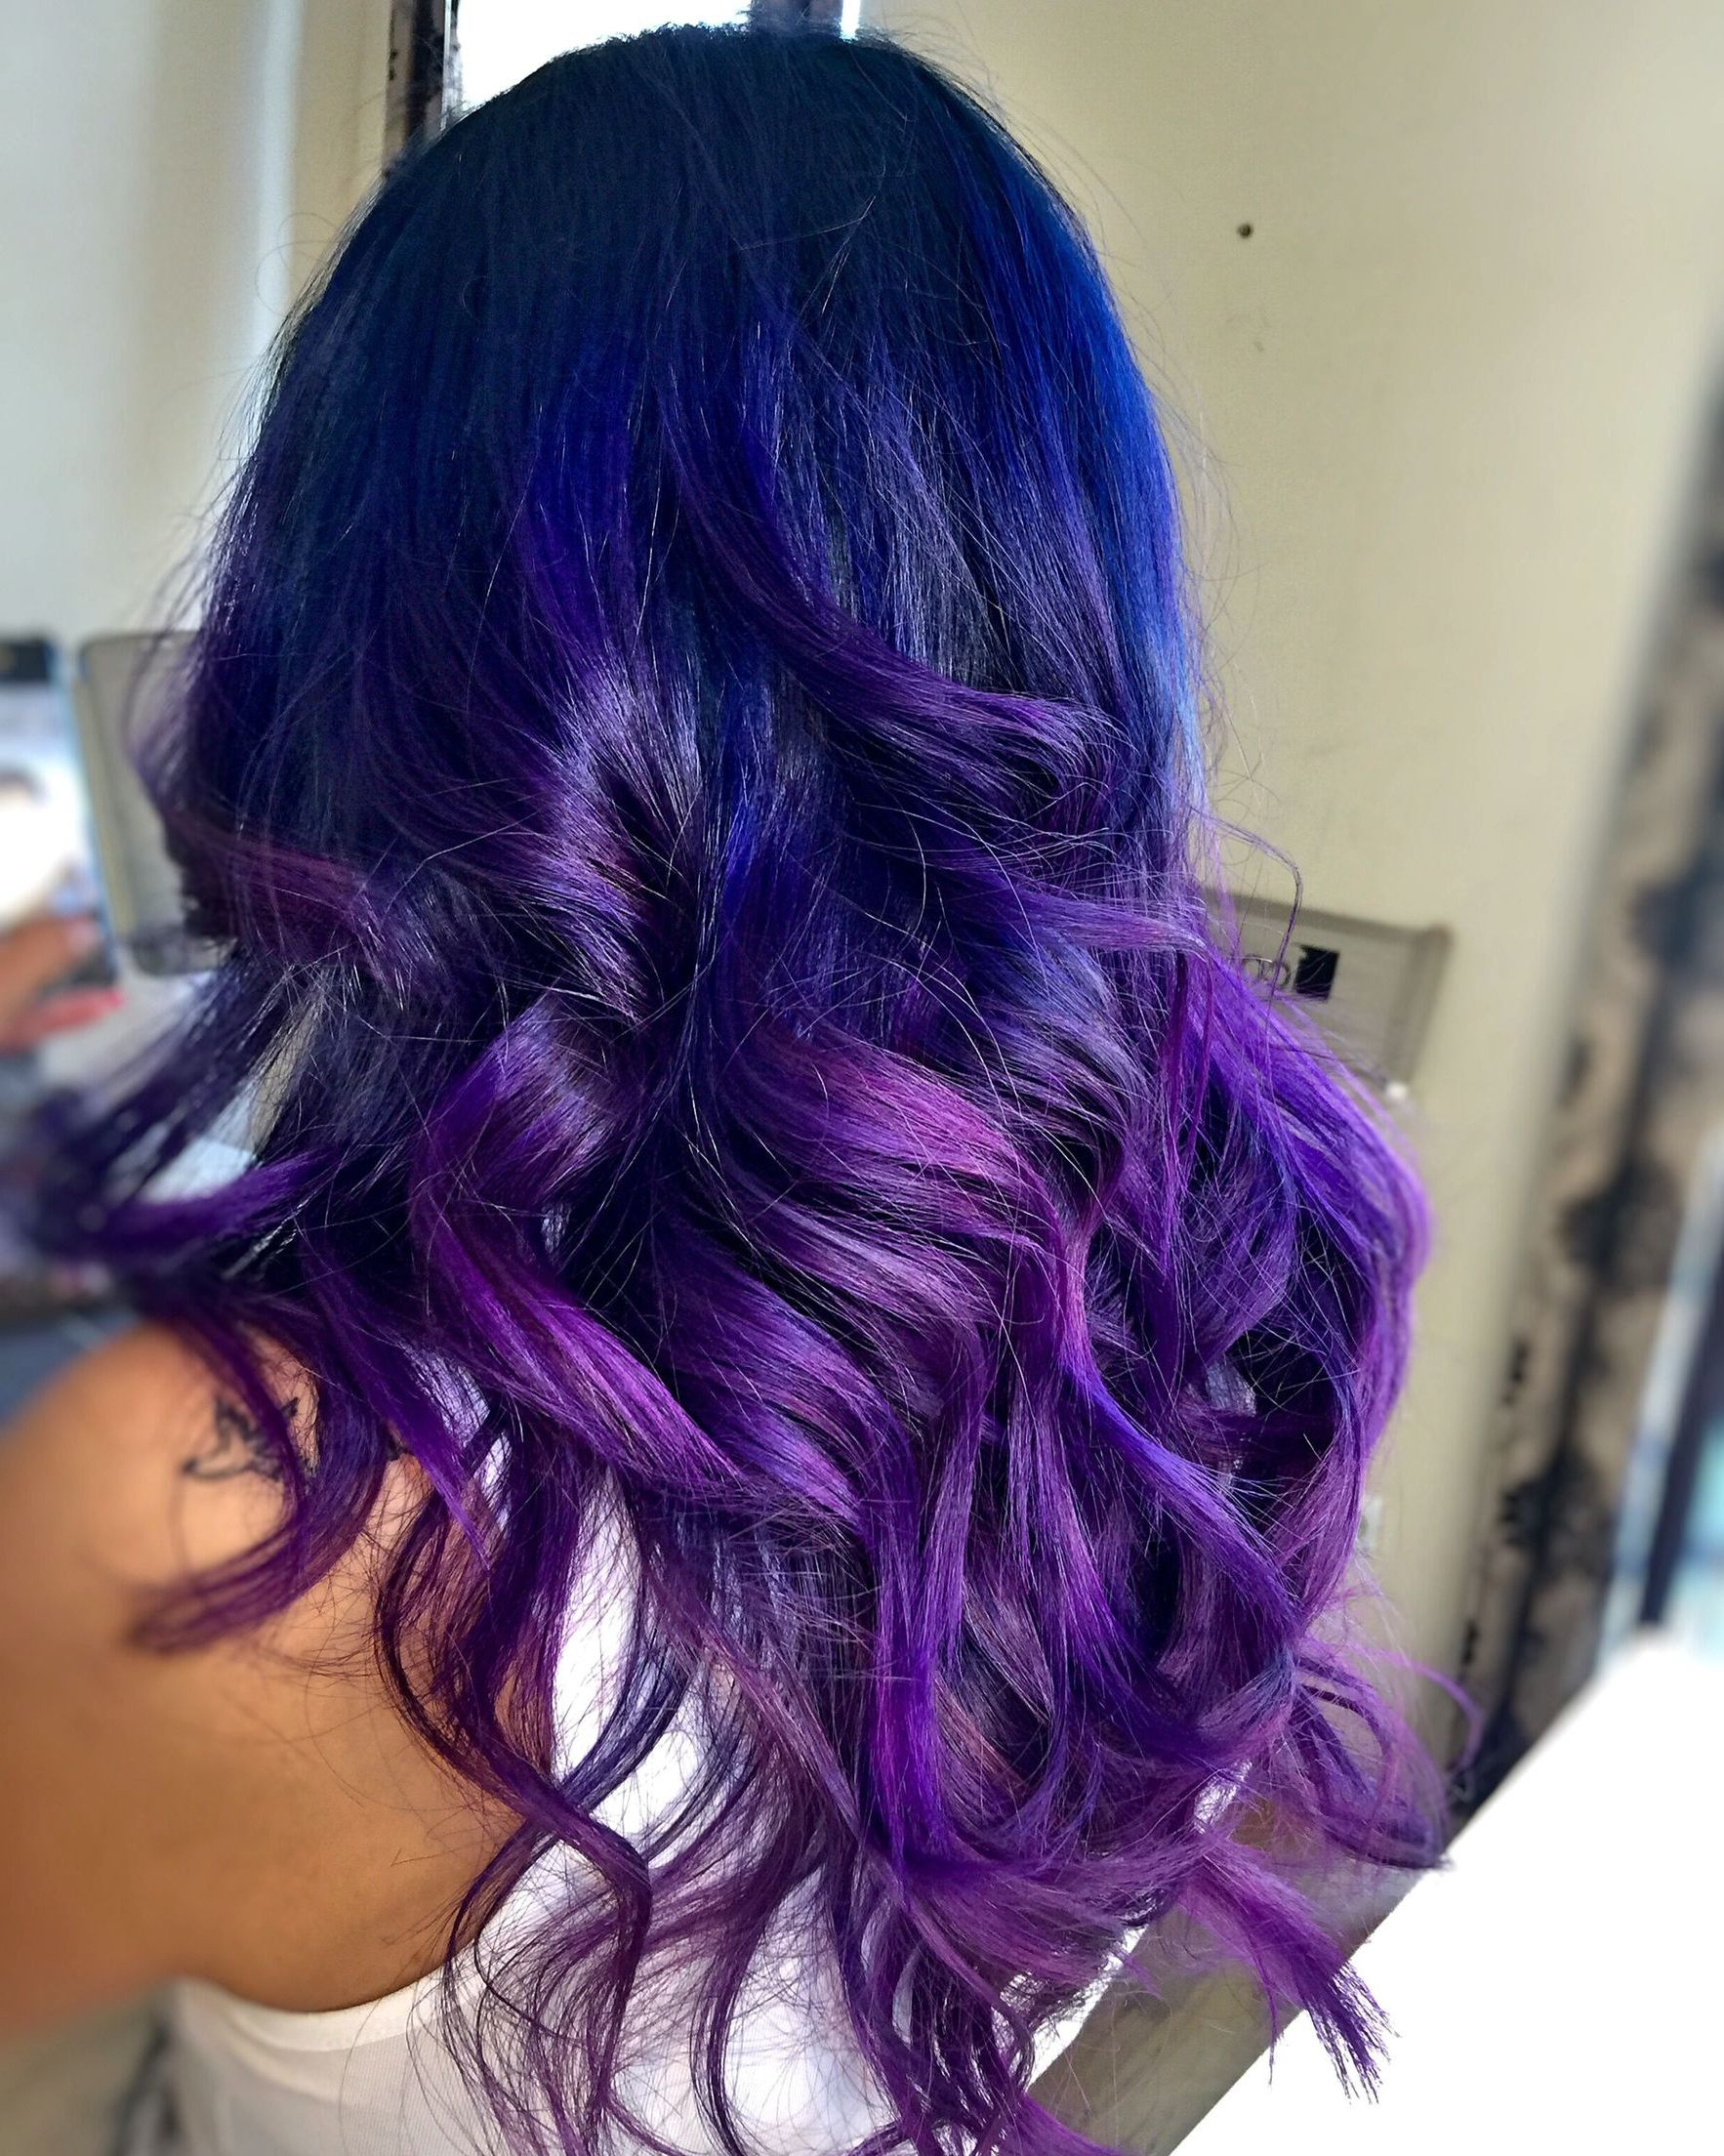 Hairstyles : Purple Hair Short Ravishing 15 Ginger Hair Dye Throughout Most Recent Ravishing Smoky Purple Ombre Hairstyles (View 13 of 20)